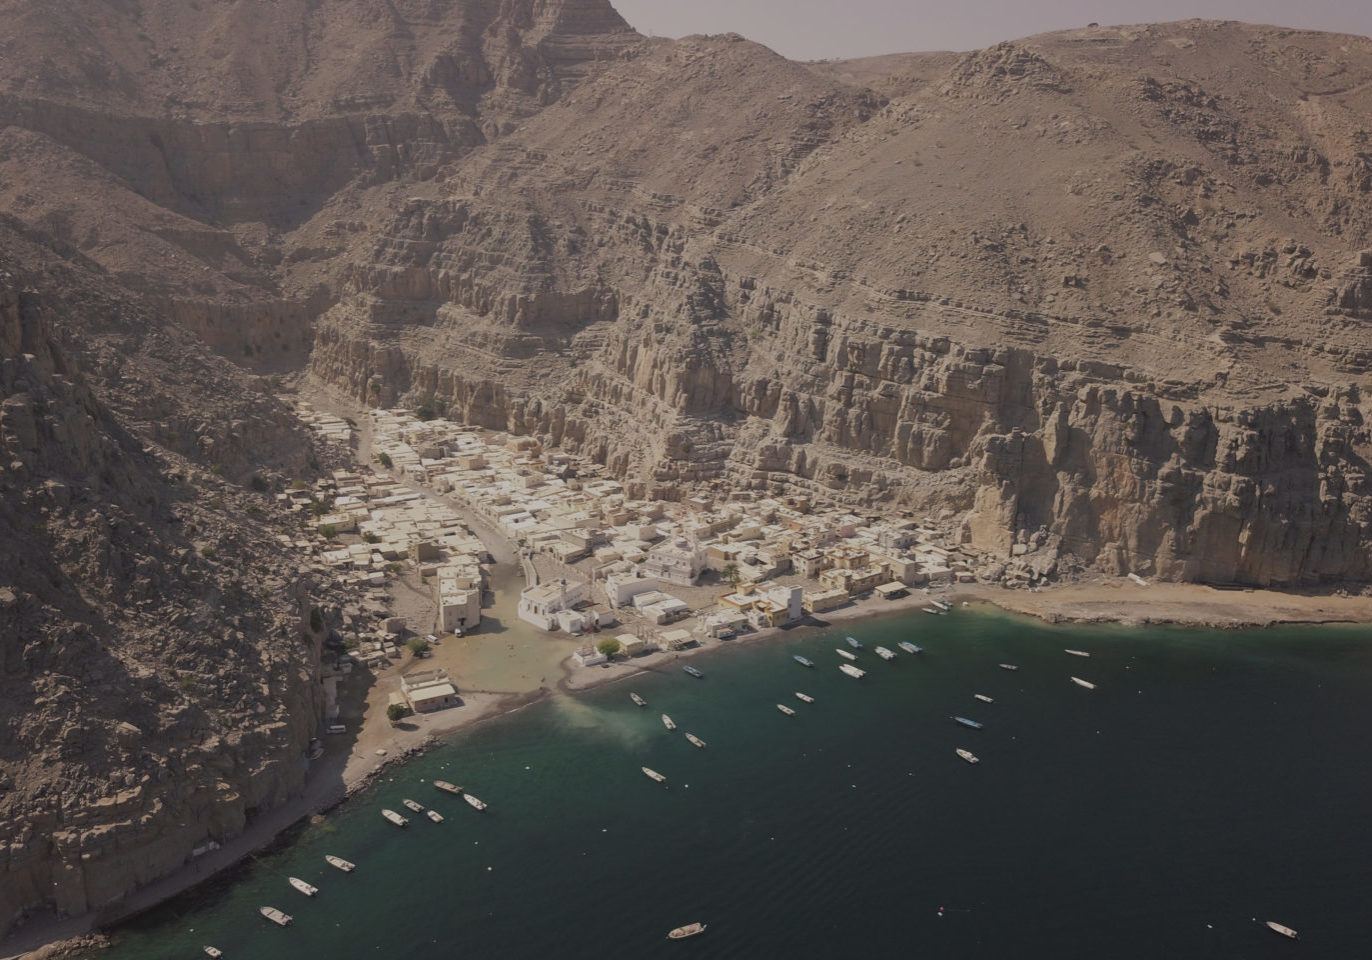 Kumzar Village Oman drone 2019